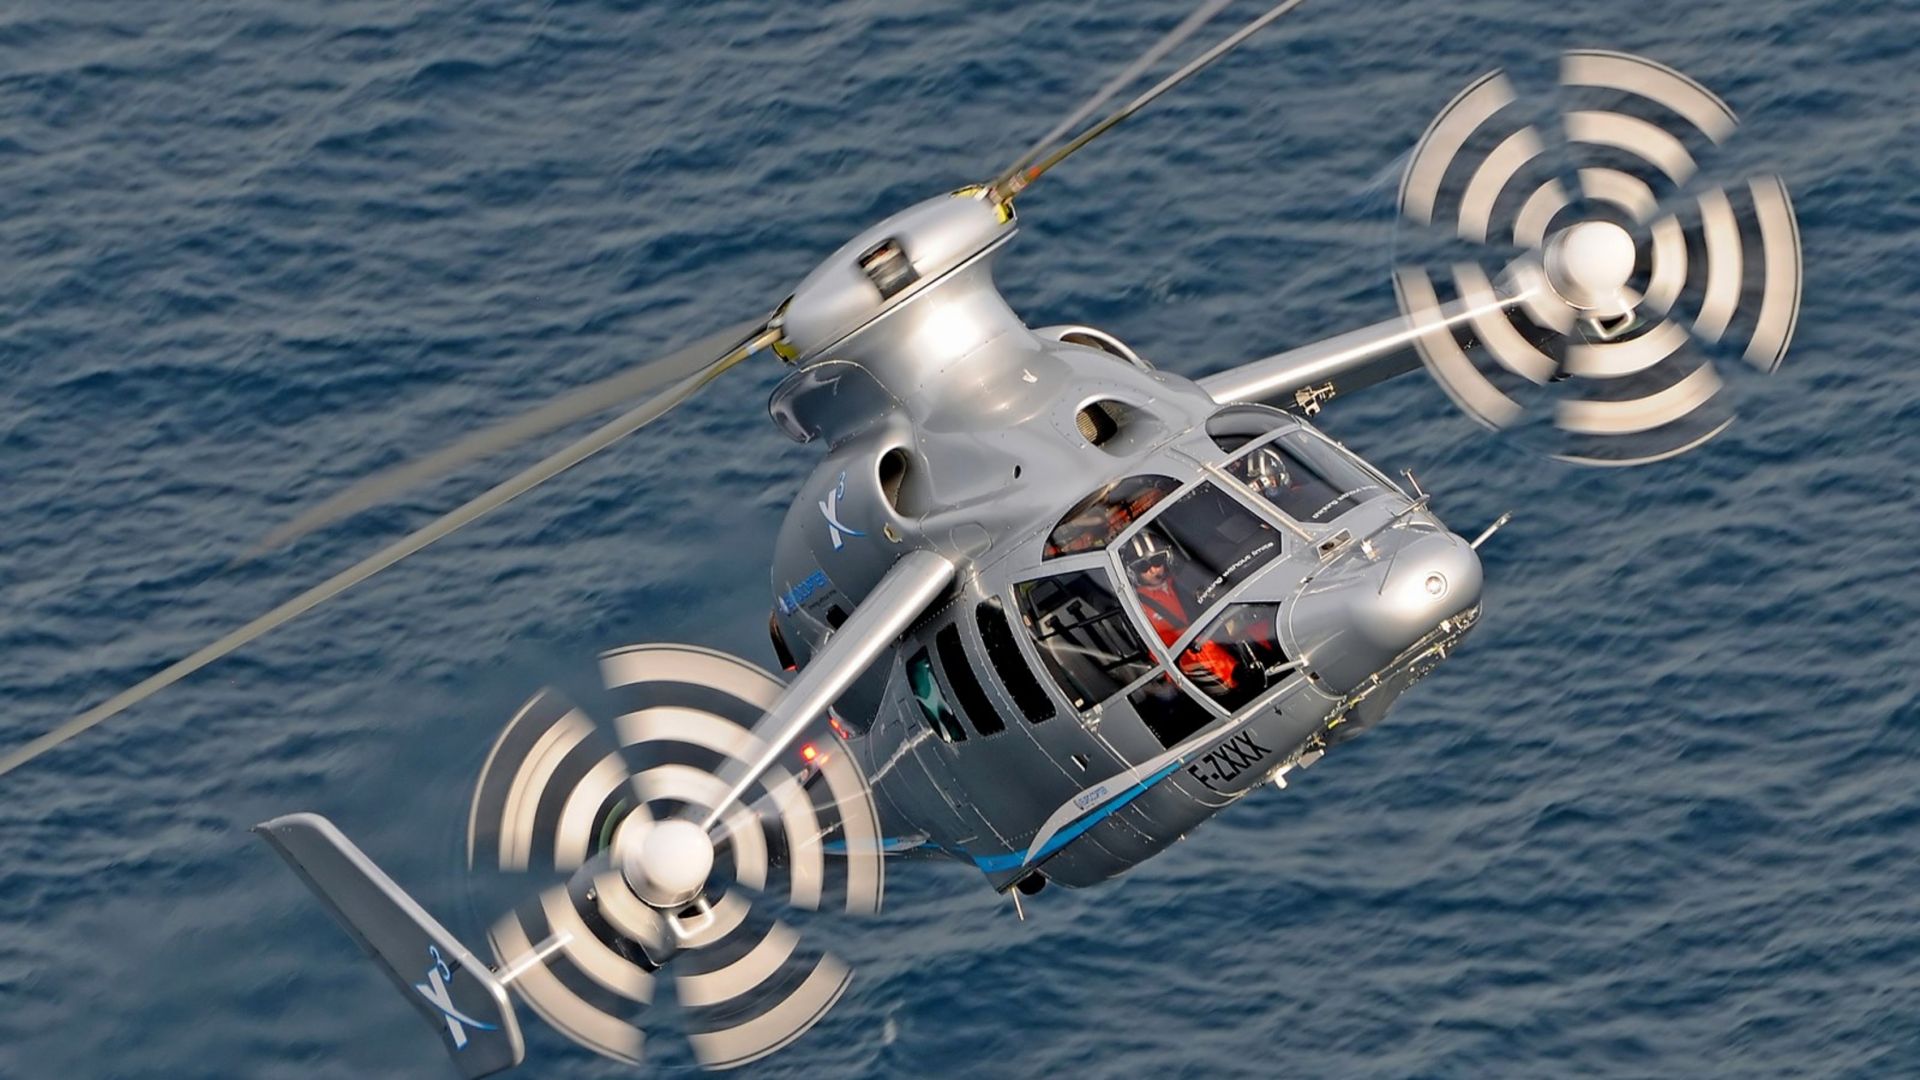 Еврокоптер икс3, Вертолет, скорость, гибрид, Eurocopter X3, Helicopter, speed, hybrid (horizontal)